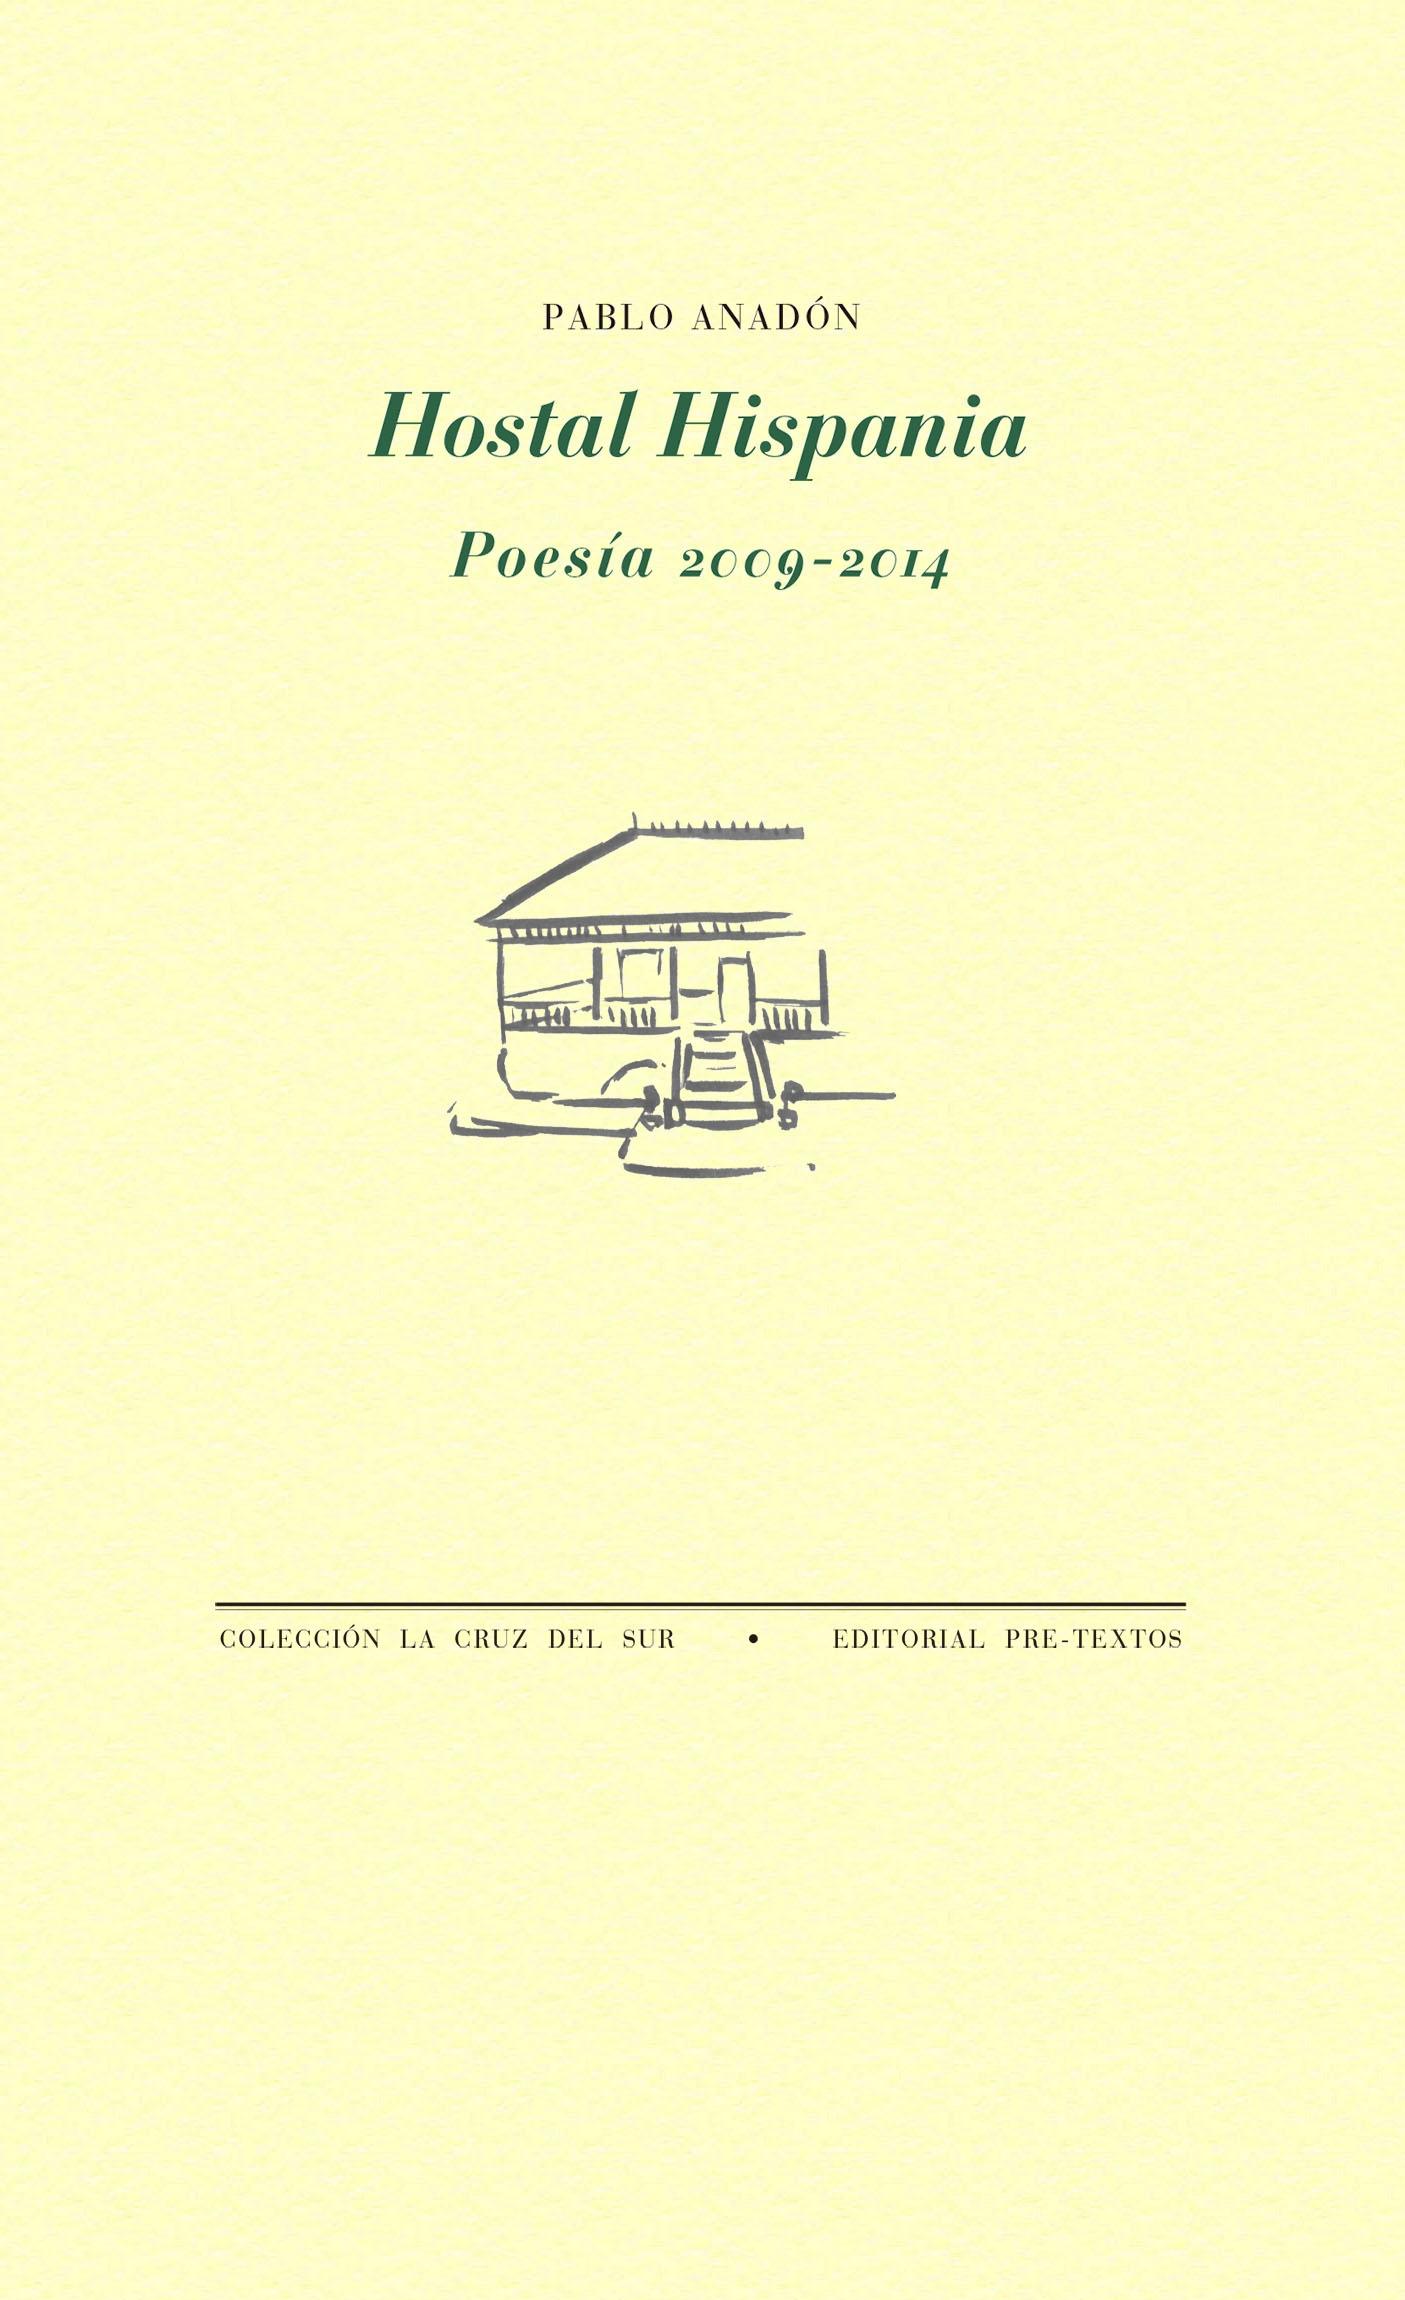 Hostal Hispania "Poesía 2009-2014". 